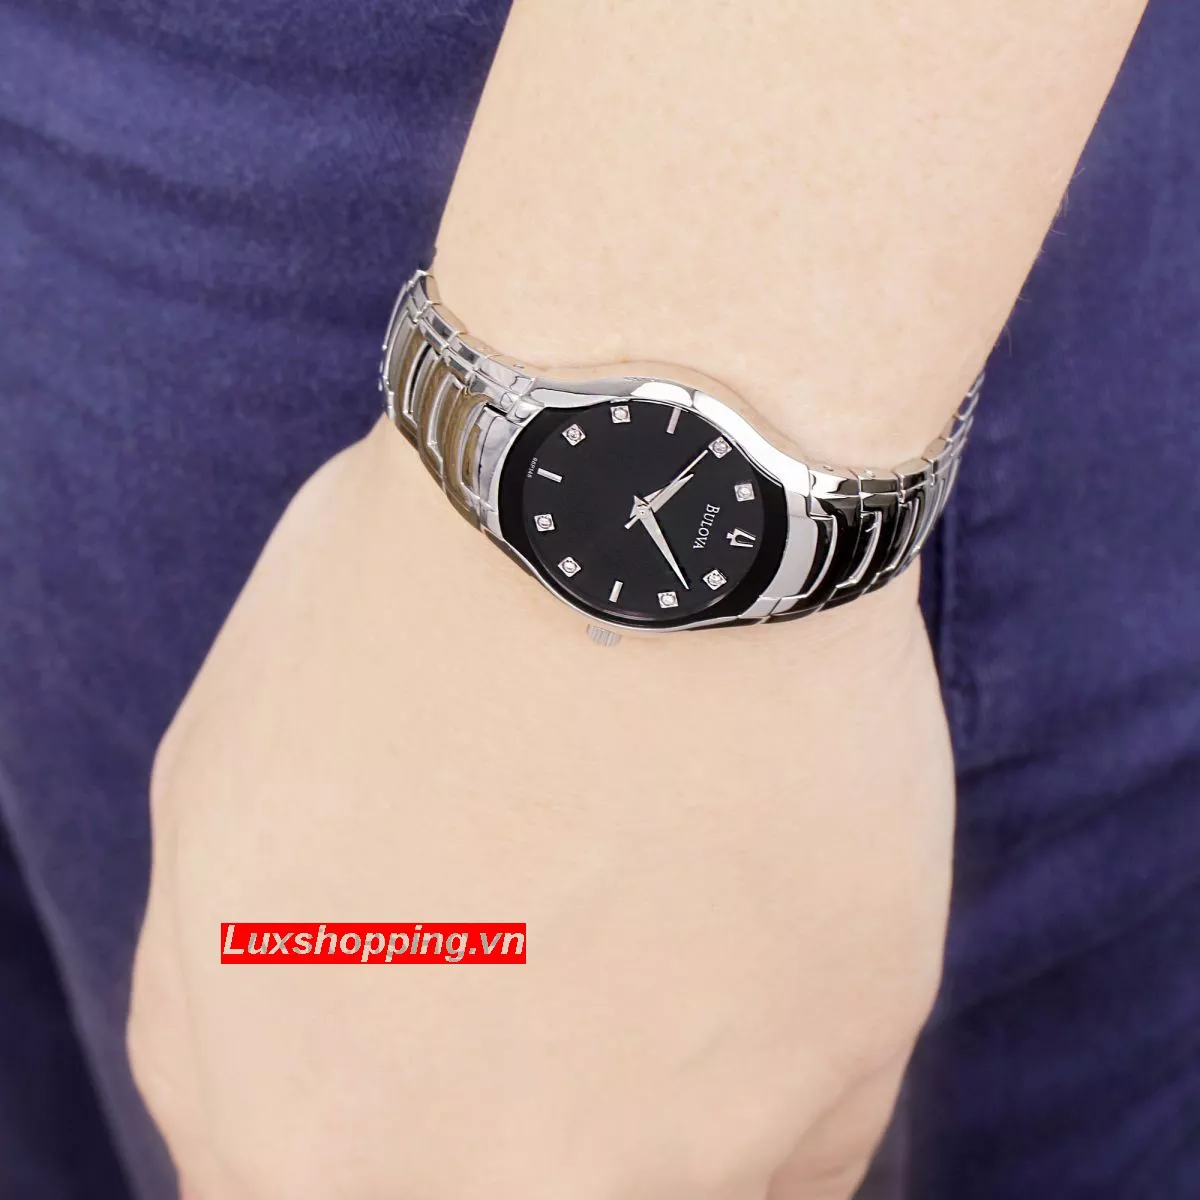 Bulova Diamond Women's Watch 30mm 